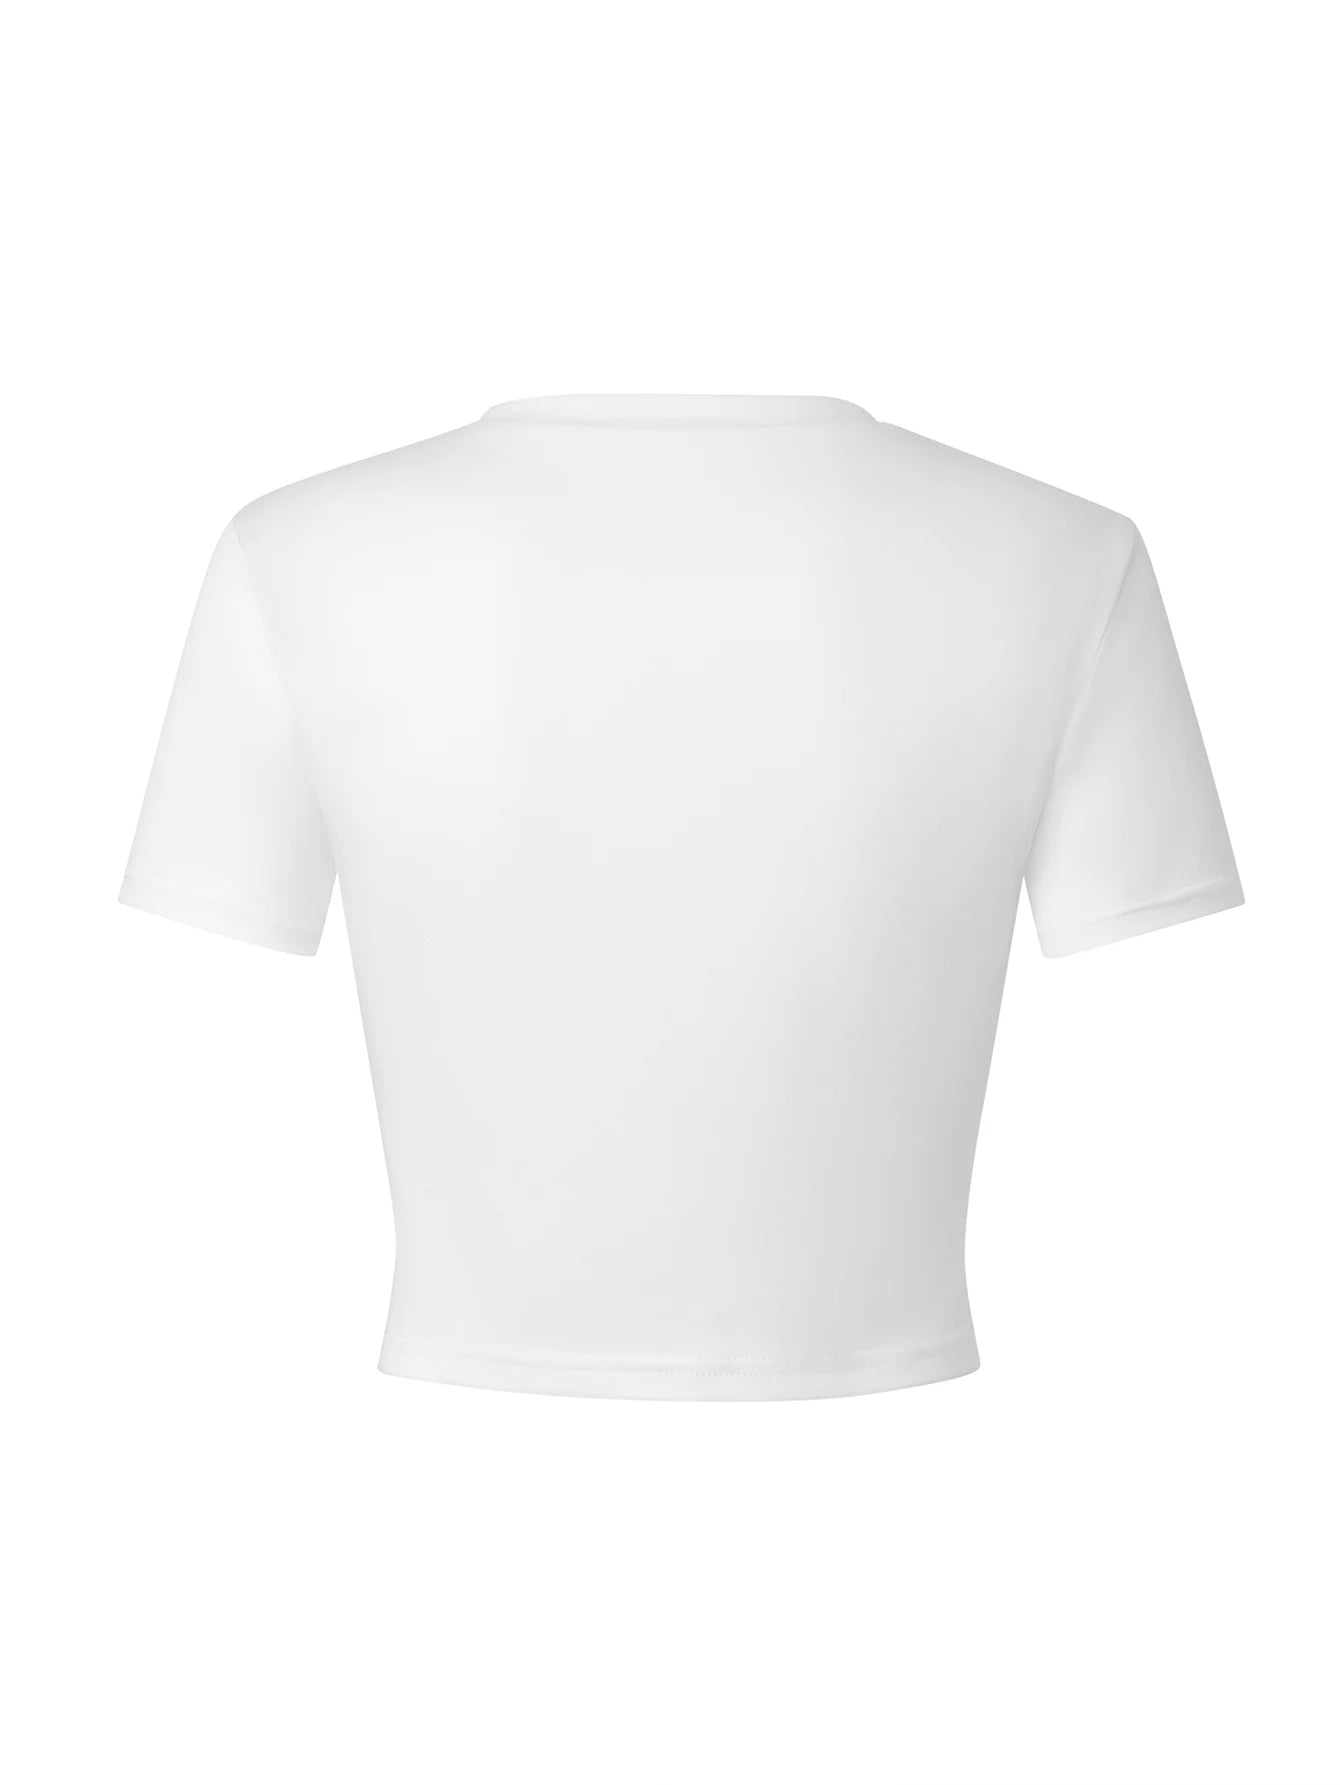 Summer Round Neck Pullover Short Sleeve Letter Print Crop Ladies Top T-Shirt